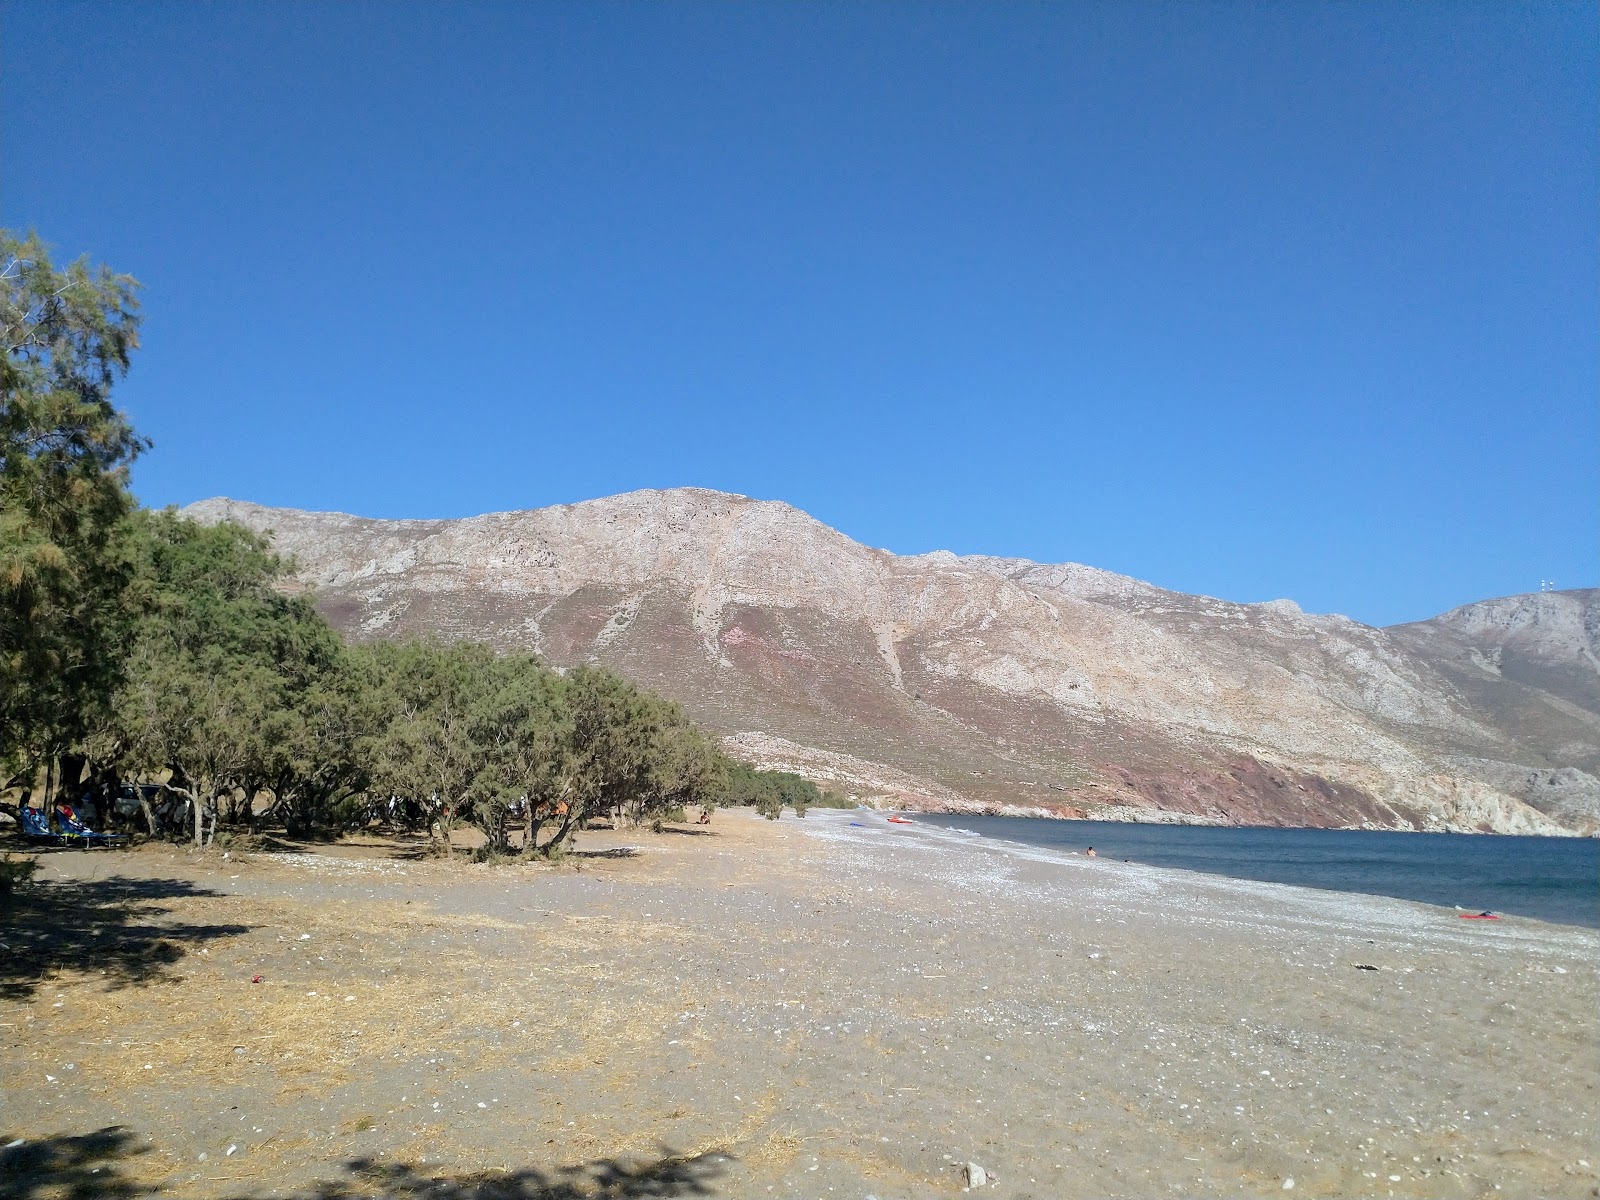 Foto di Eristos beach ubicato in zona naturale